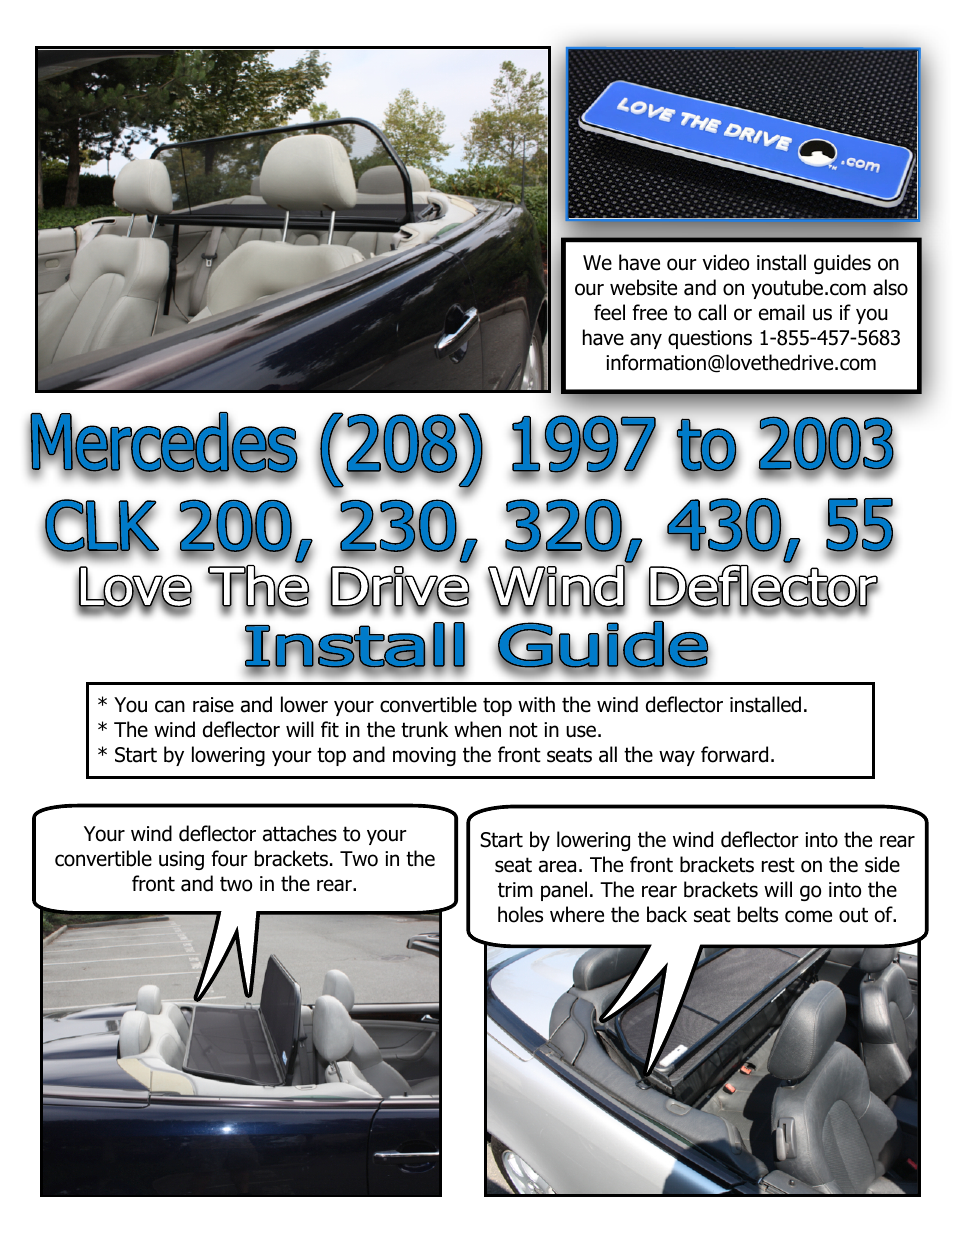 Mercedes CLK 200, 230, 320, 430 & 55 1997 to 2003